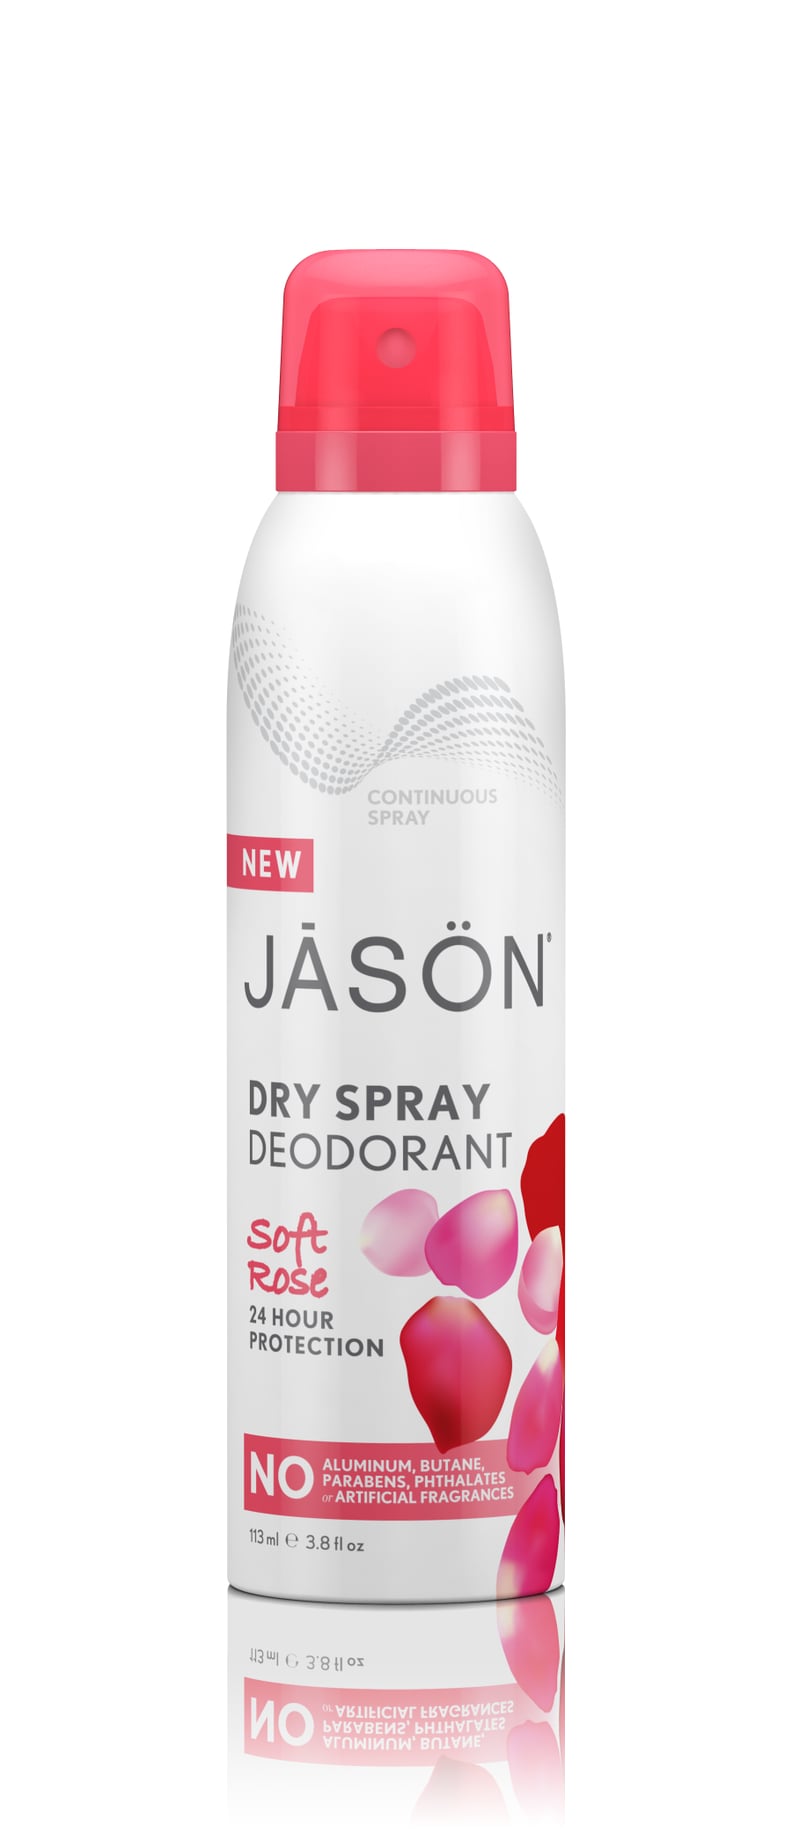 Jasön Dry Spray Deodorant